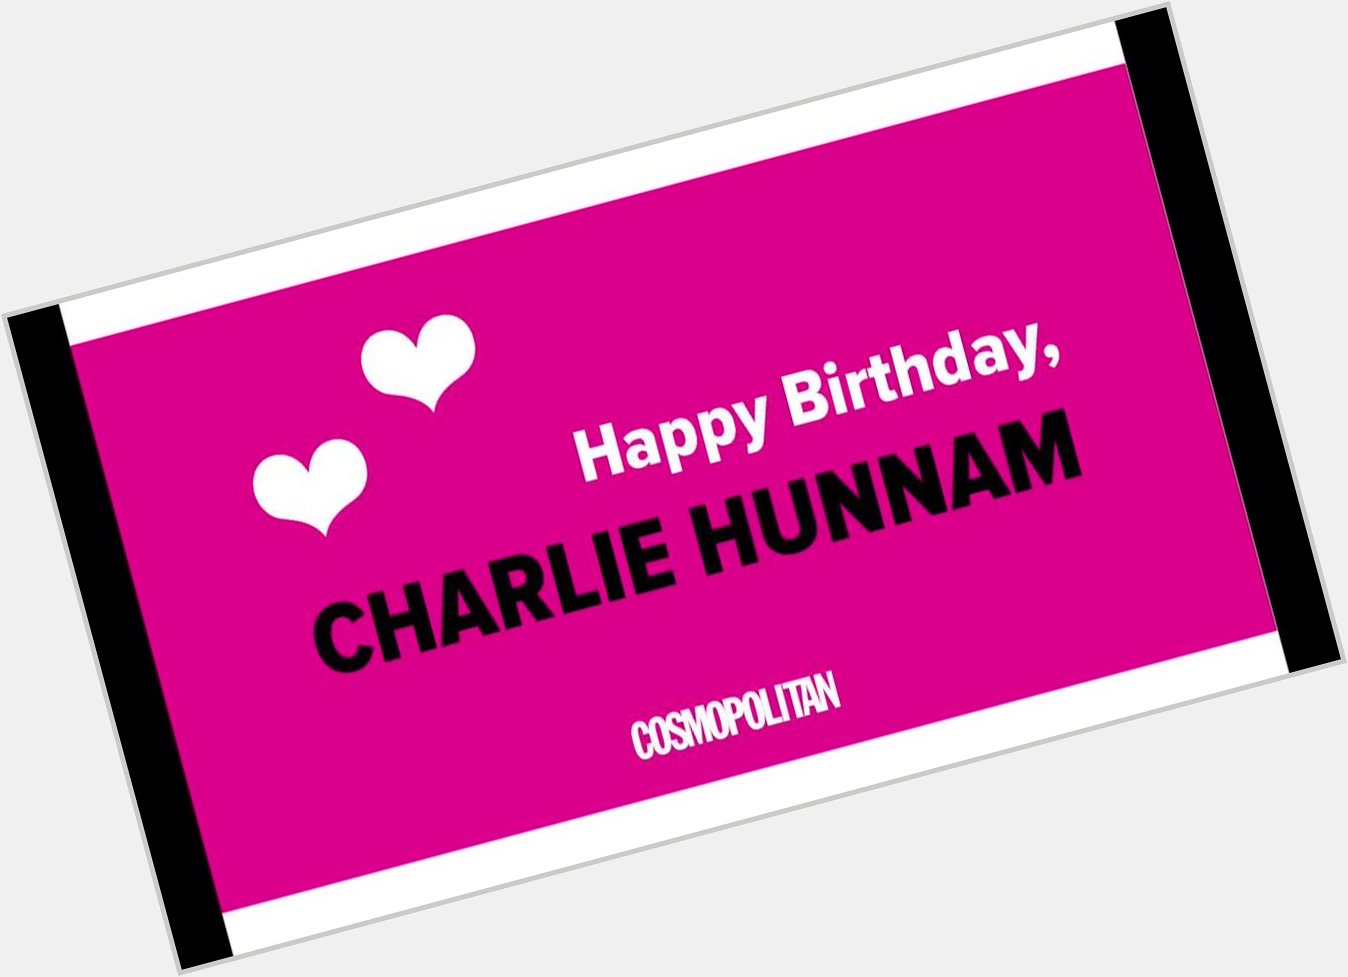 Cosmopolitan: Happy birthday, Charlie Hunnam. You sexy, sexy specimen.  